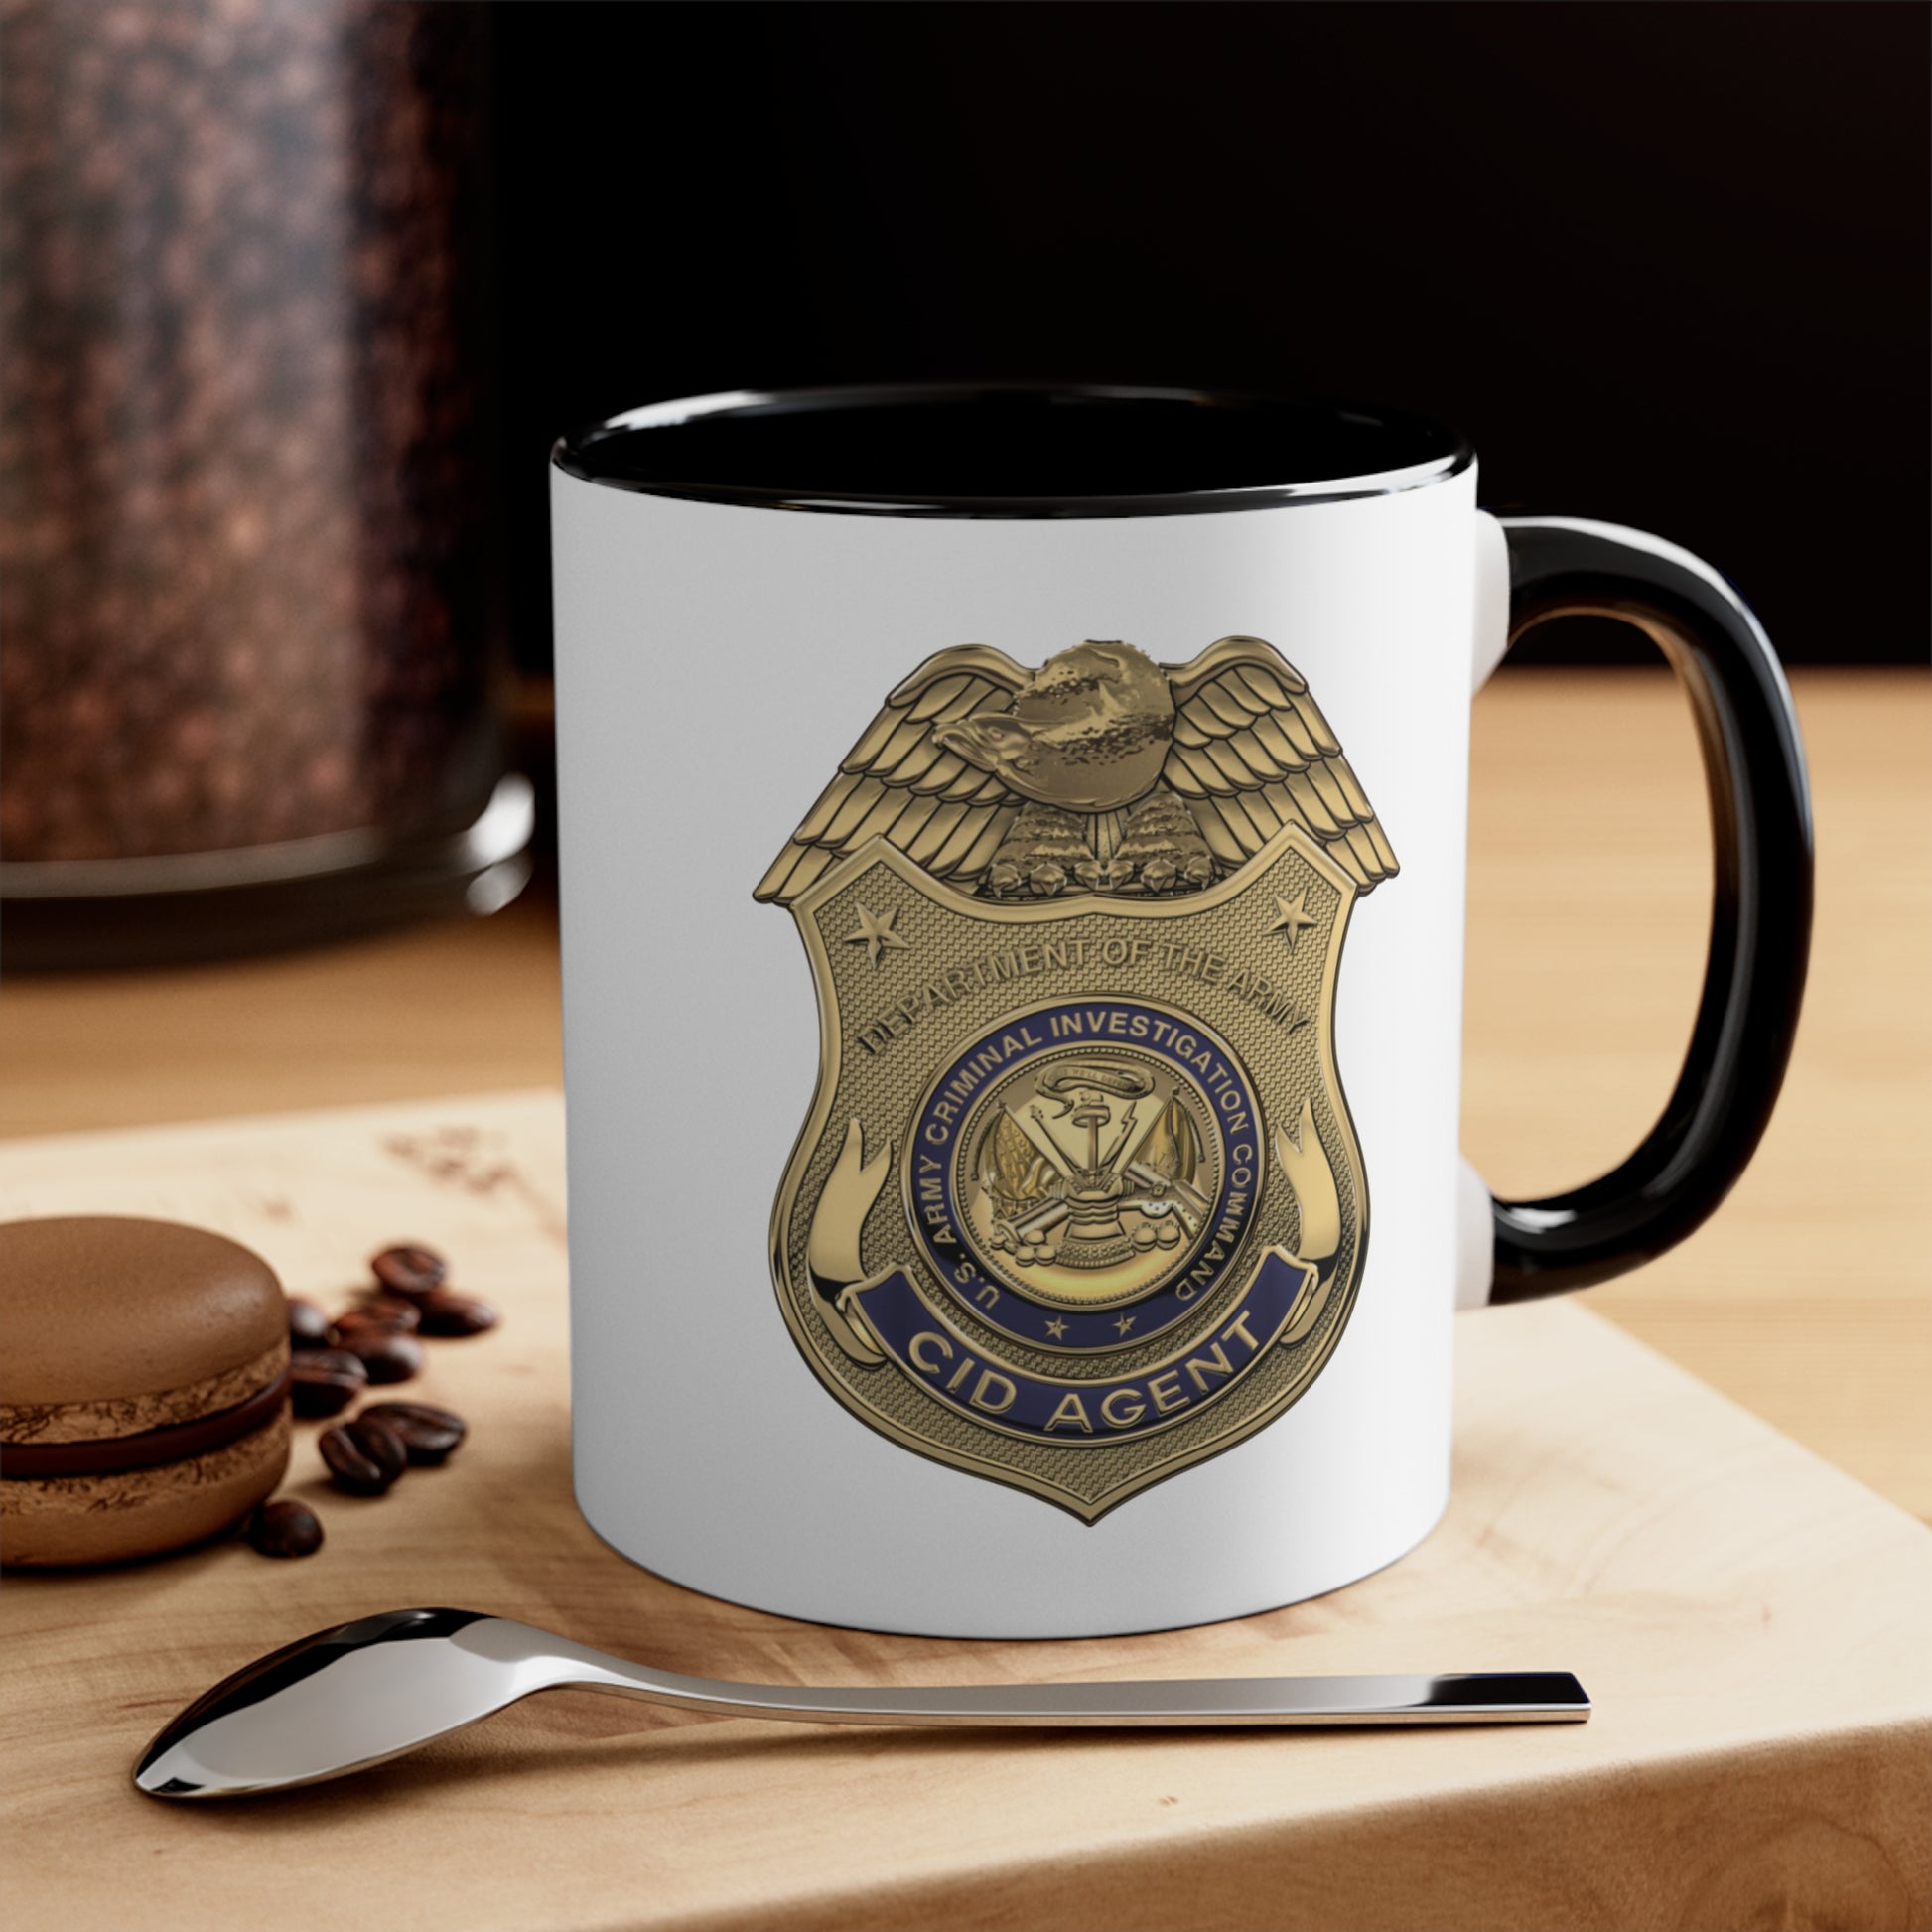 Army CID Agent Badge Coffee Mug - Double Sided Black Accent White Ceramic 11oz by TheGlassyLass.com